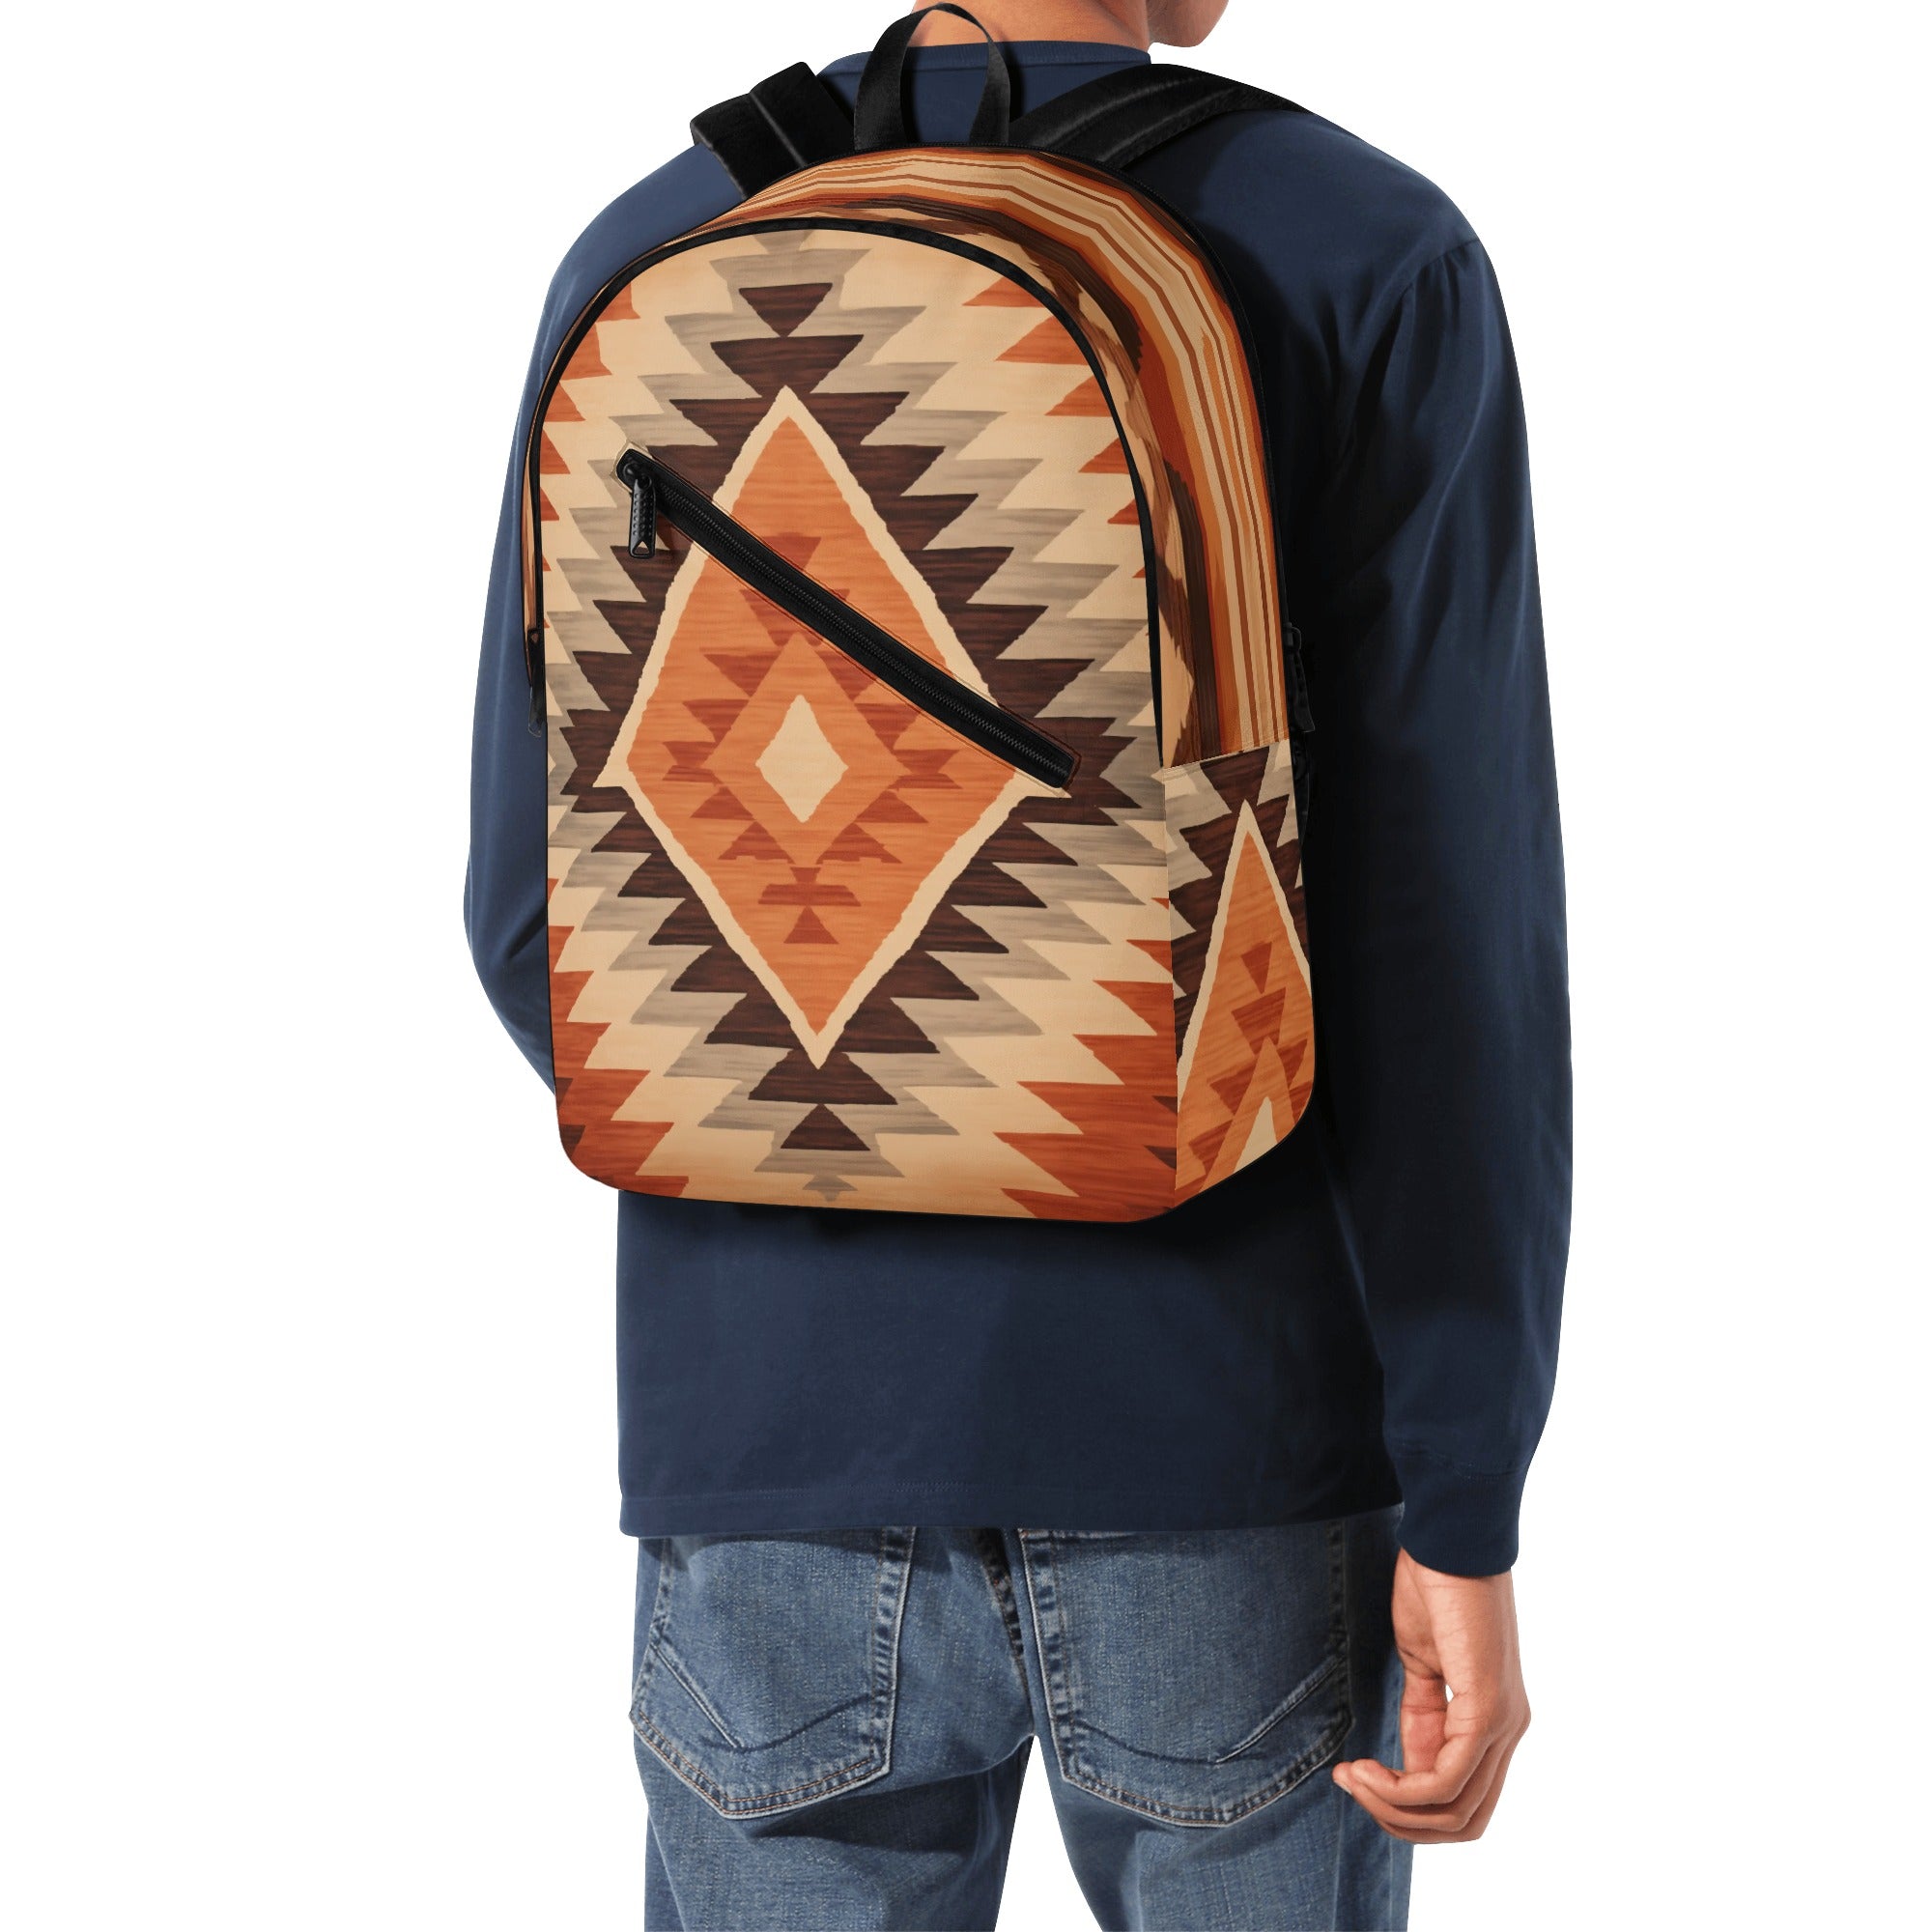 Southwestern Inspired Pattern Backpack - Brown